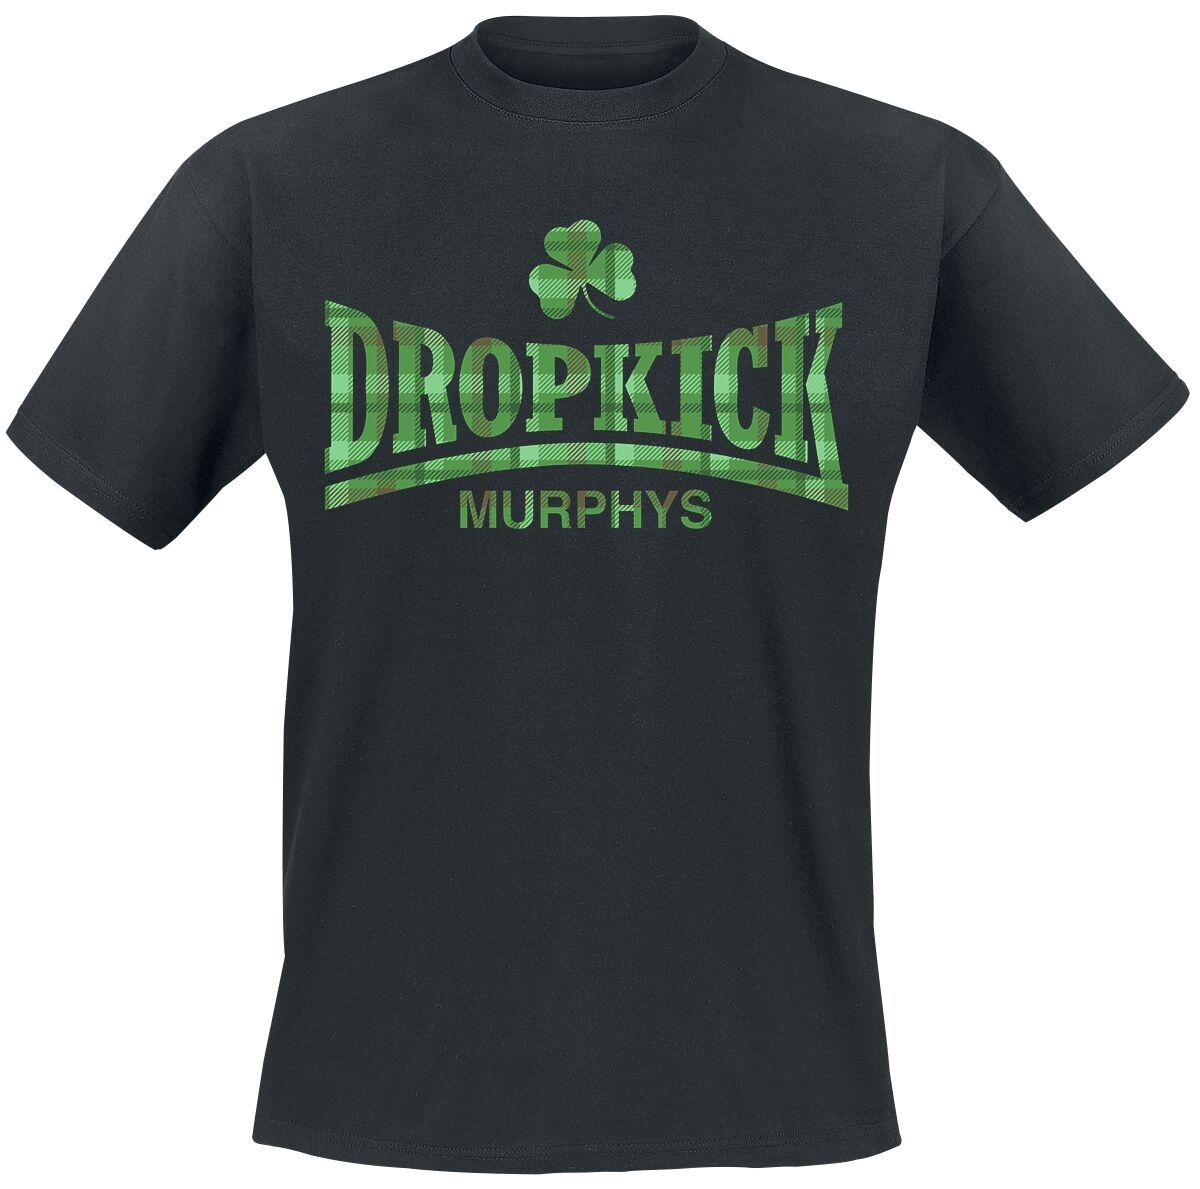 Dropkick murphys tshirt